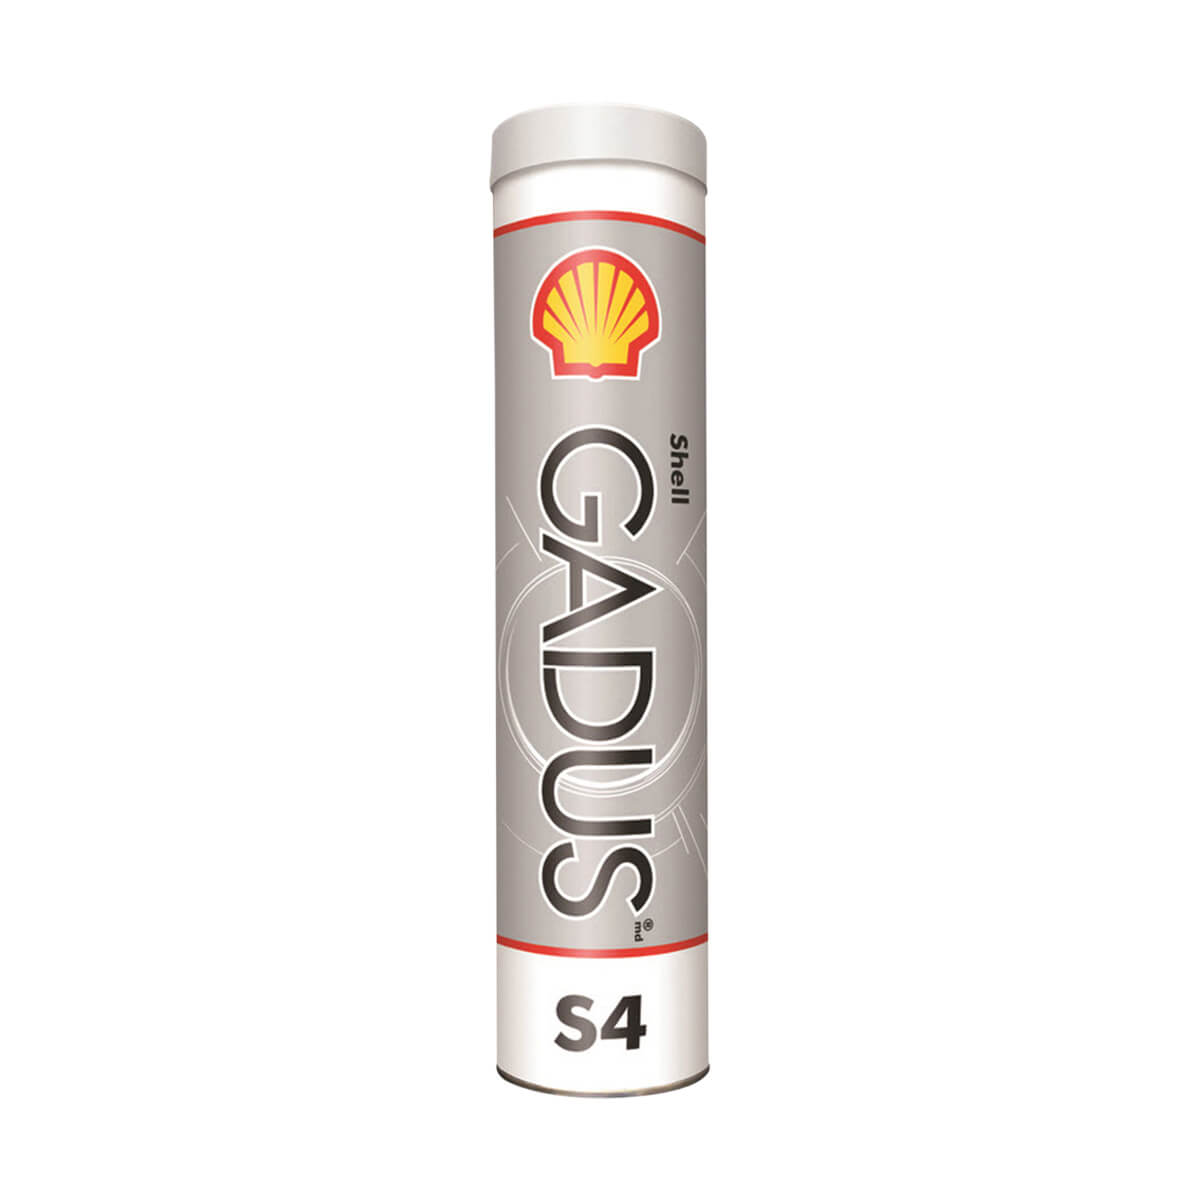 Shell Gadus S4 V600AC 1.5 - 400 g